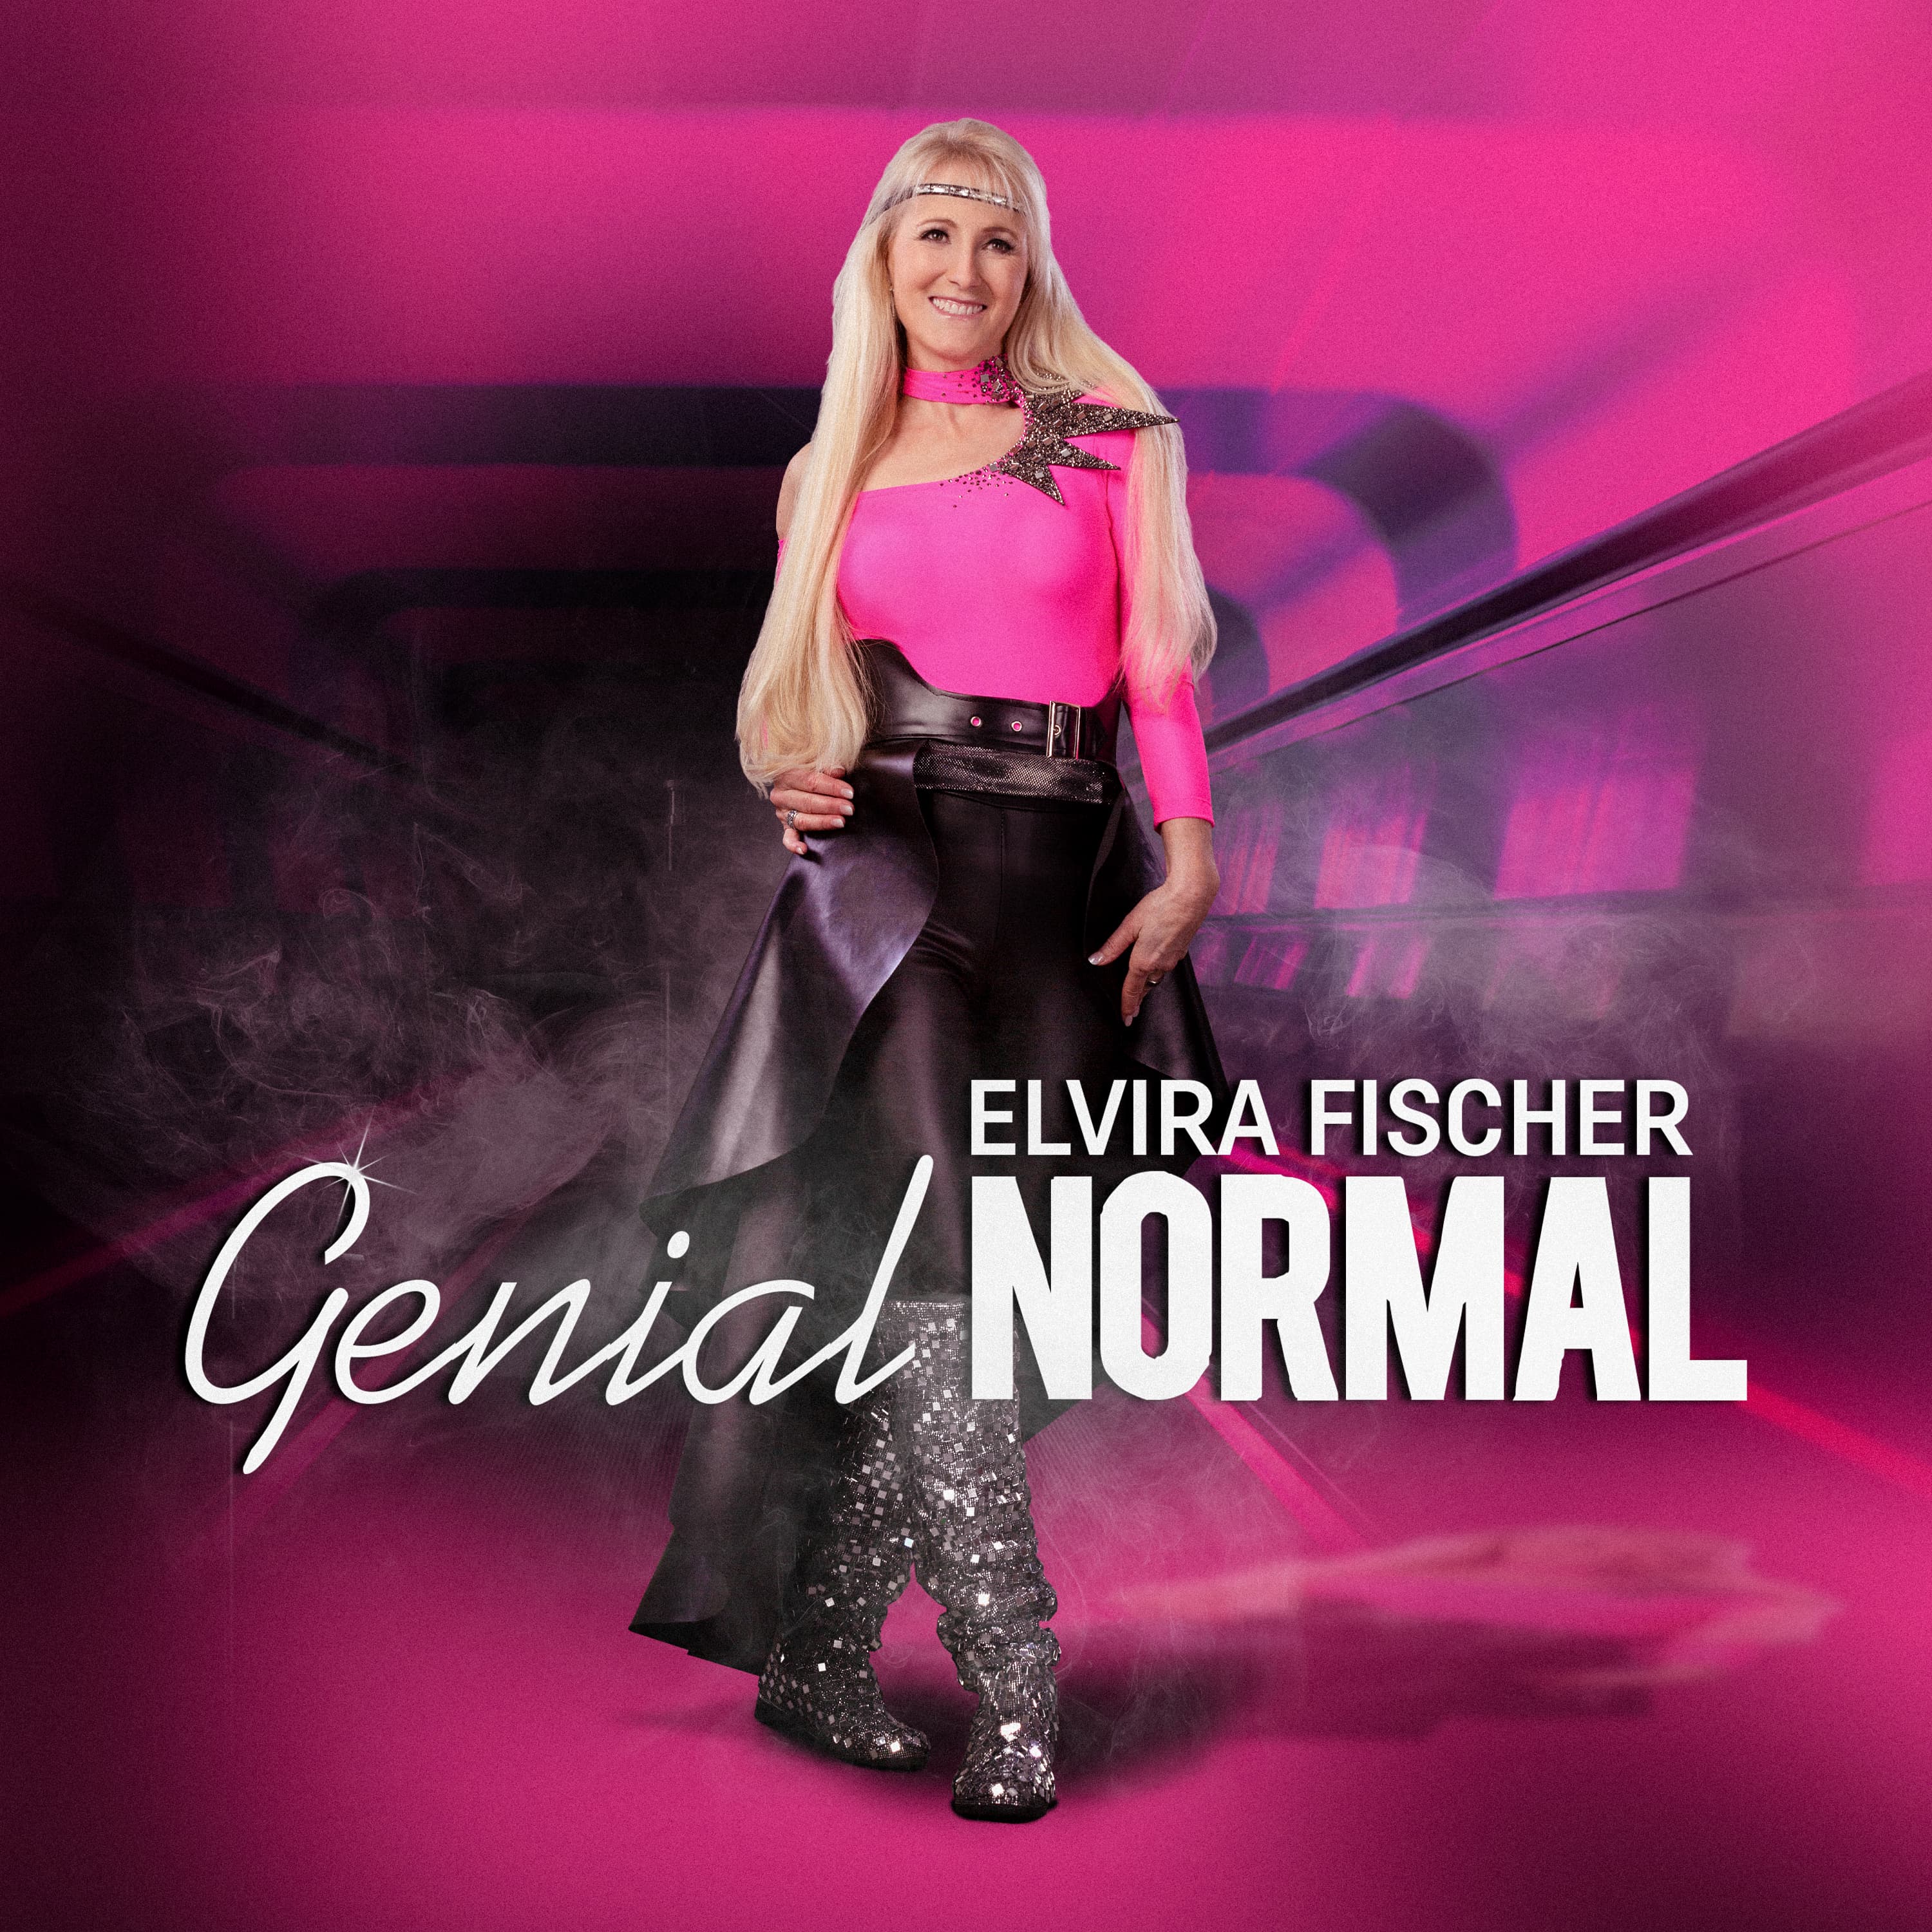 Cover - Album Genial Normal